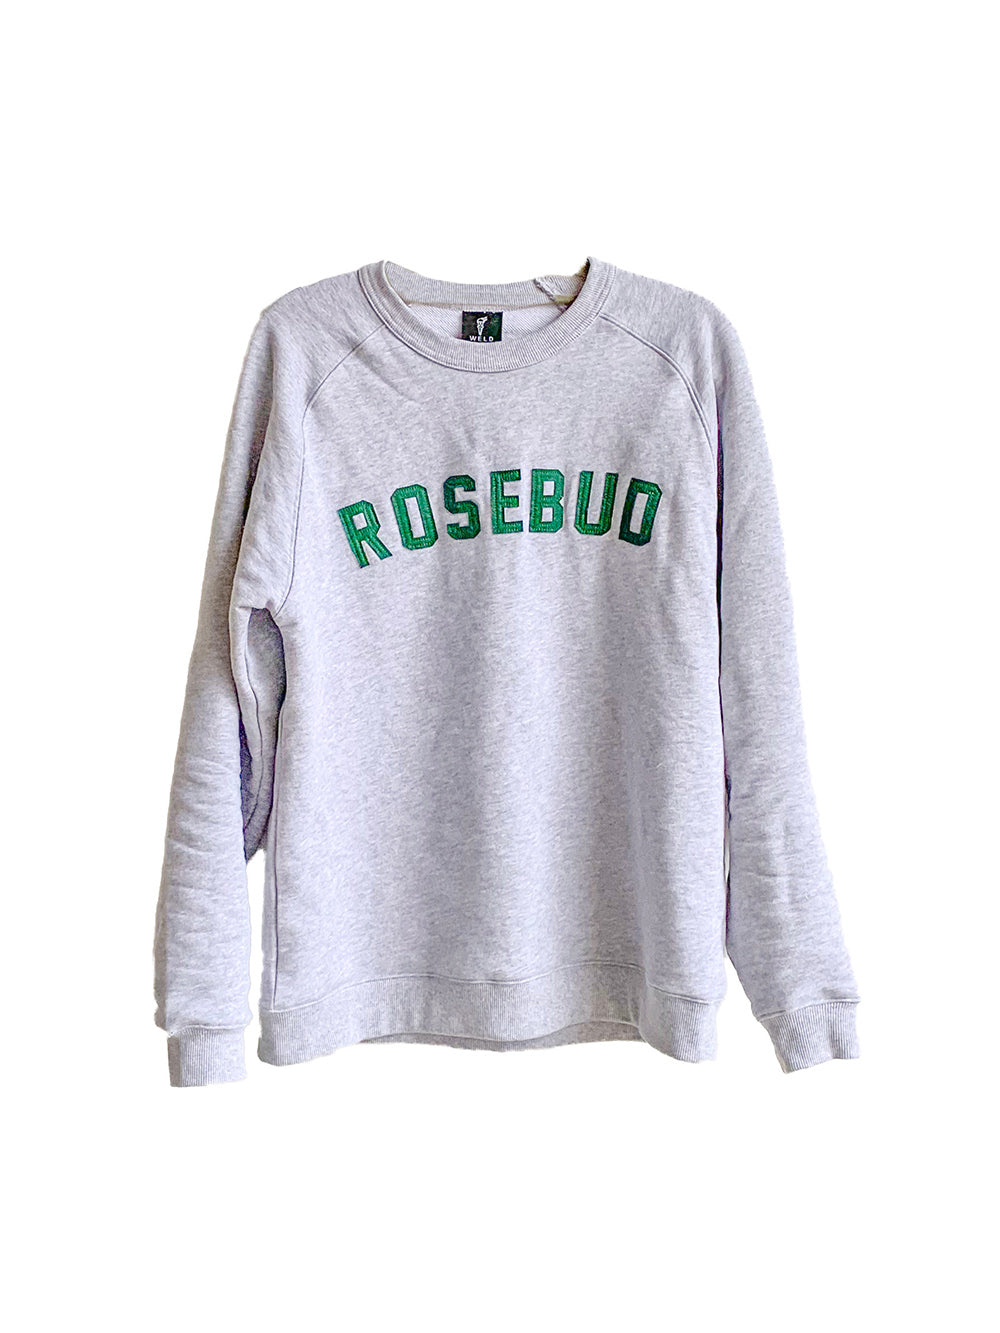 Rosebud Hemp Sweatshirt